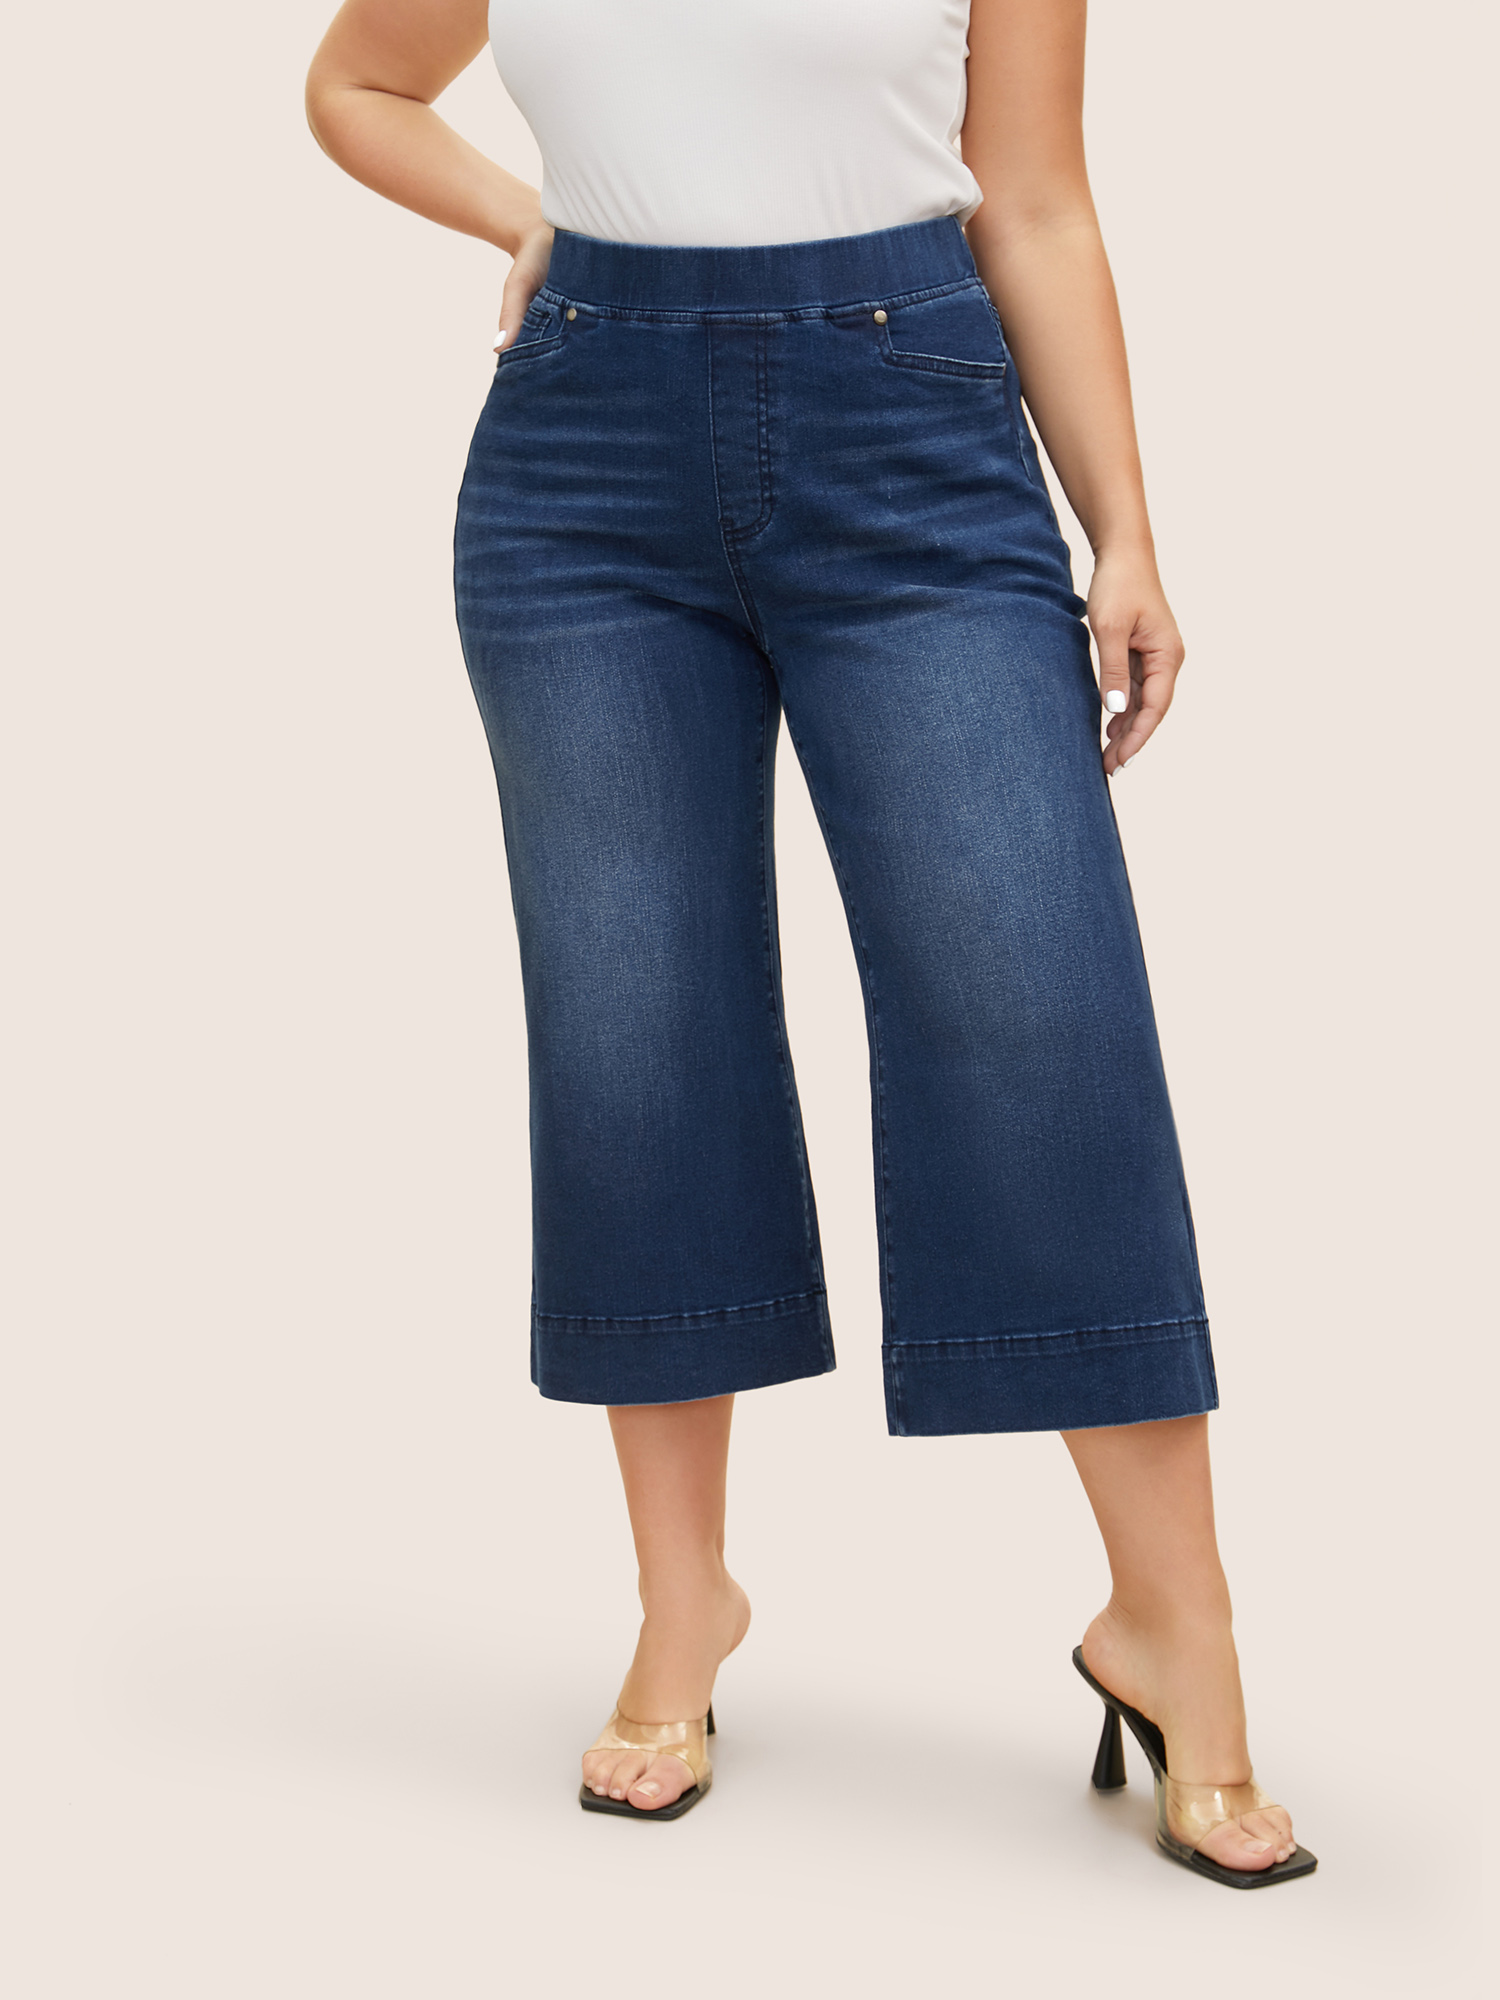 

Plus Size Dark Wash Elastic Waist Wide Leg Cropped Jeans Women Denimindigo Casual Non High stretch Double-flap pocket Jeans BloomChic